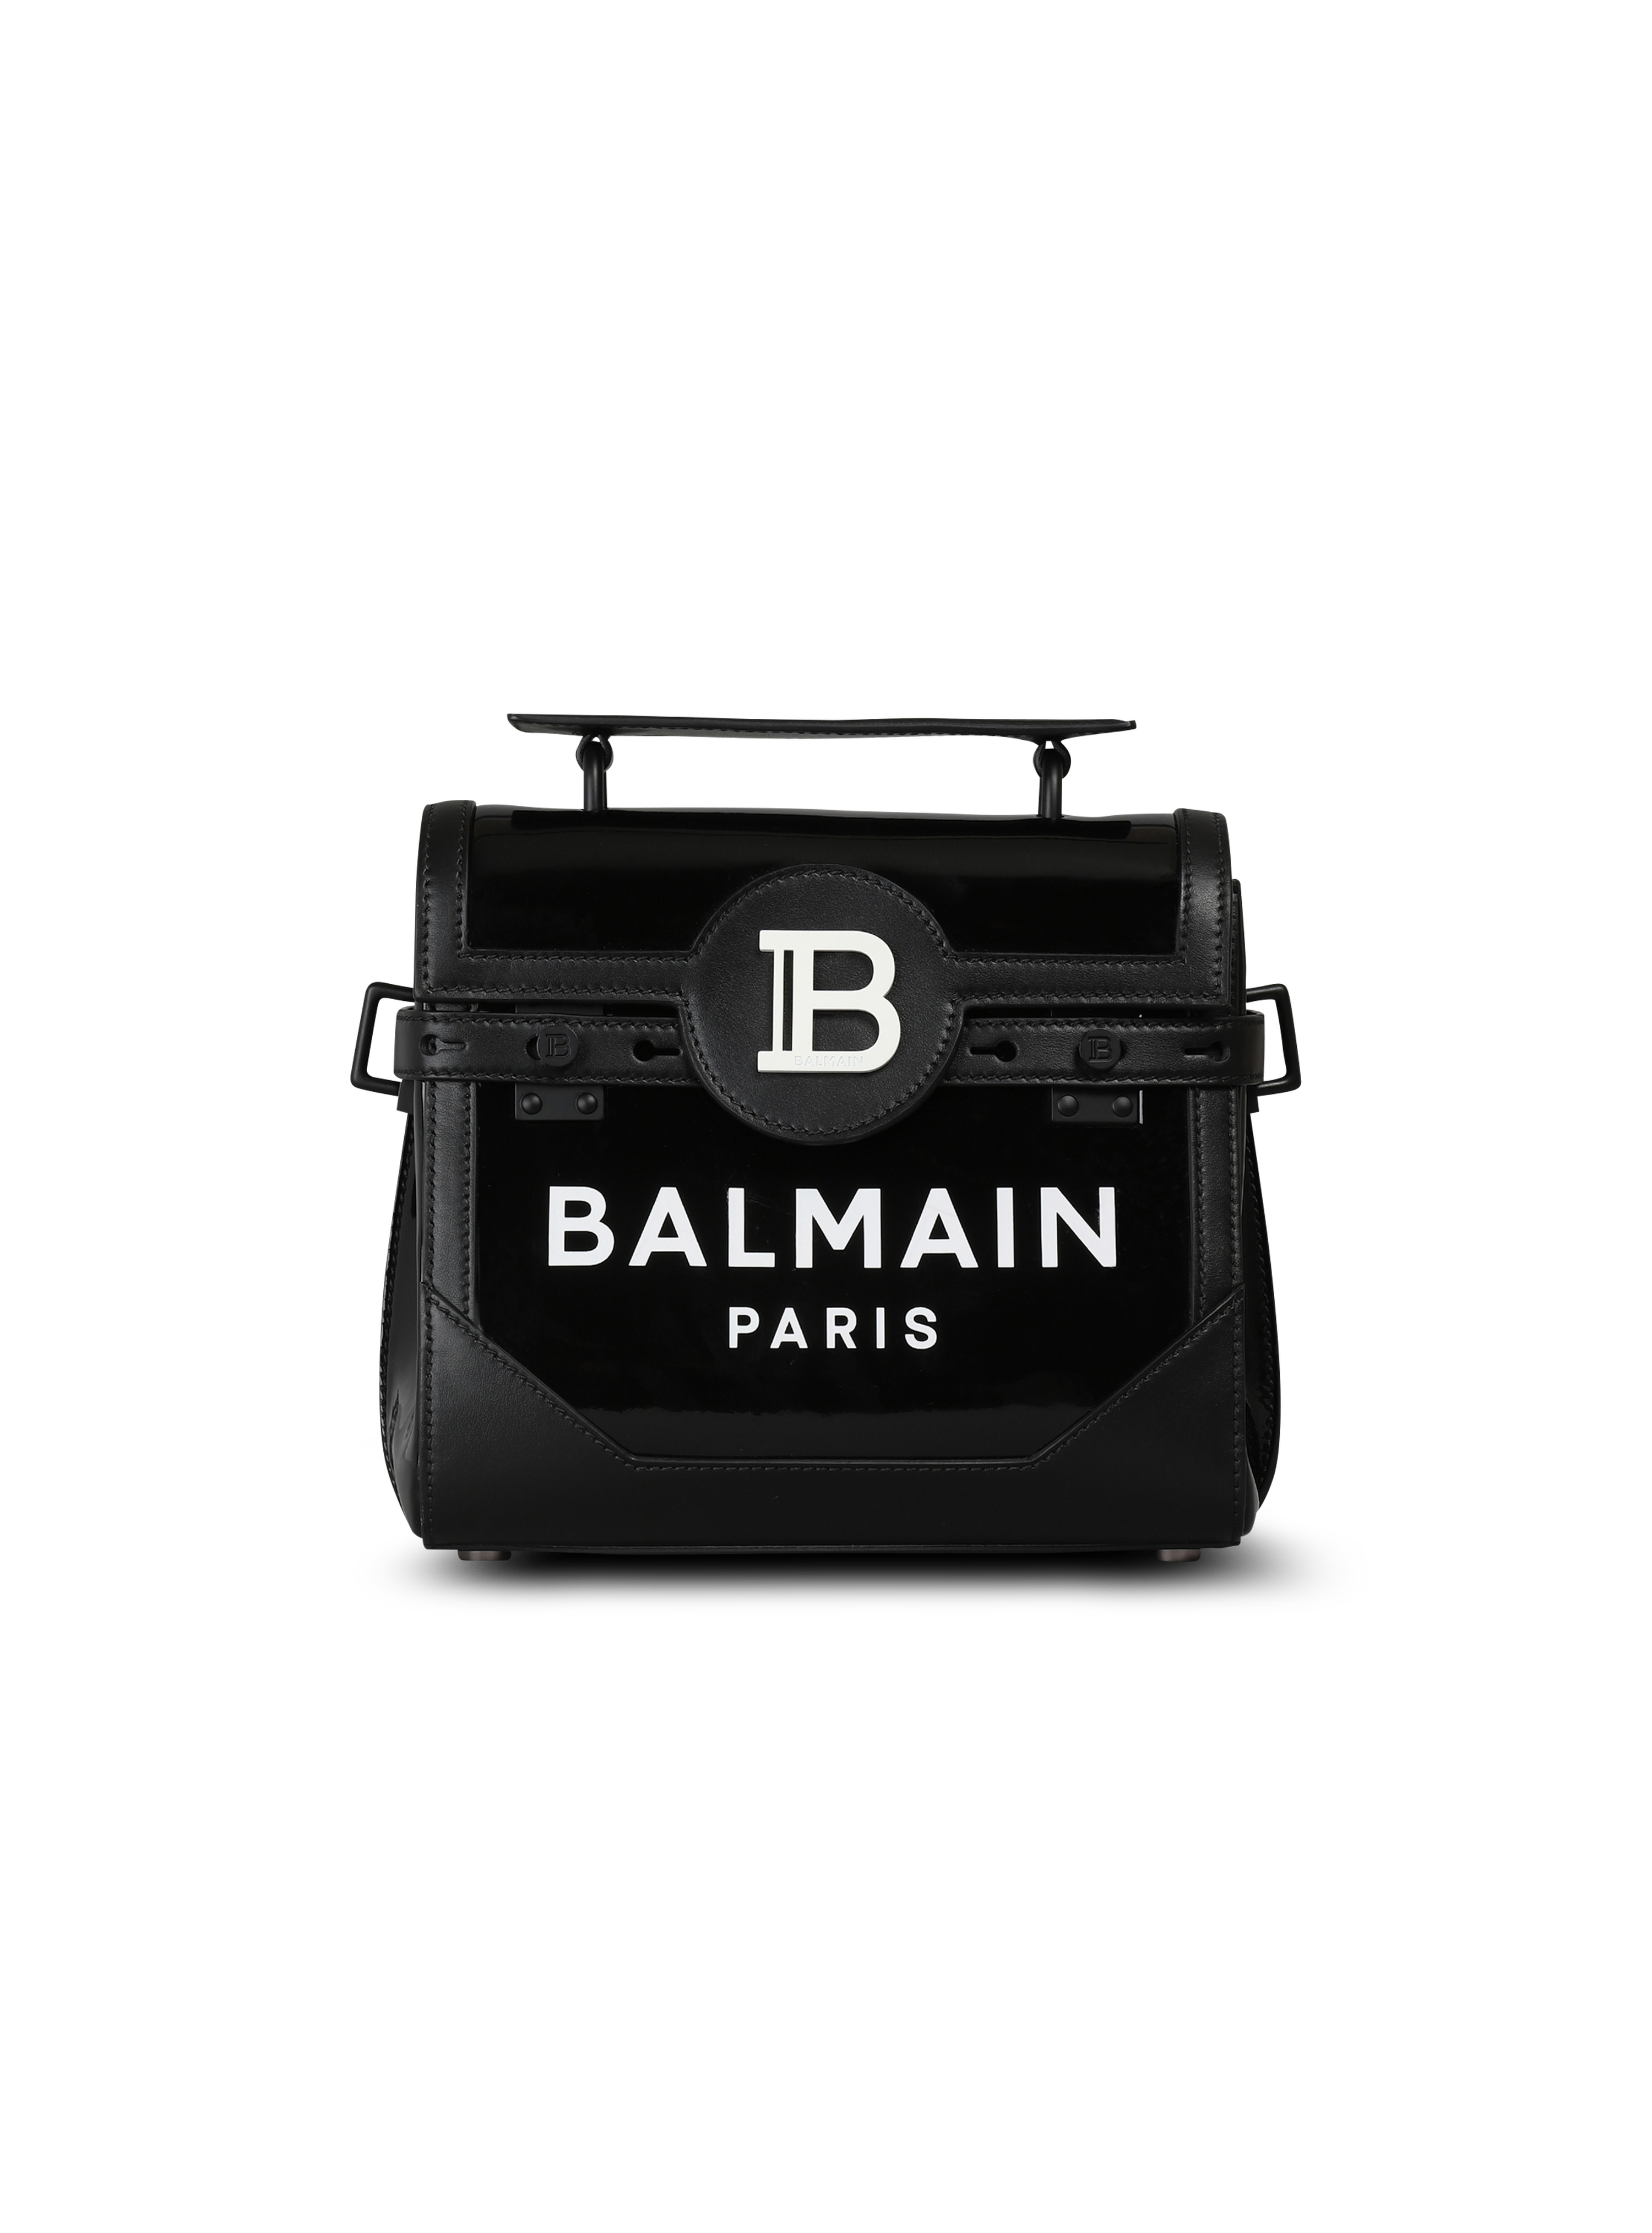 B-Buzz 23 vinyl bag with Balmain Paris logo, black